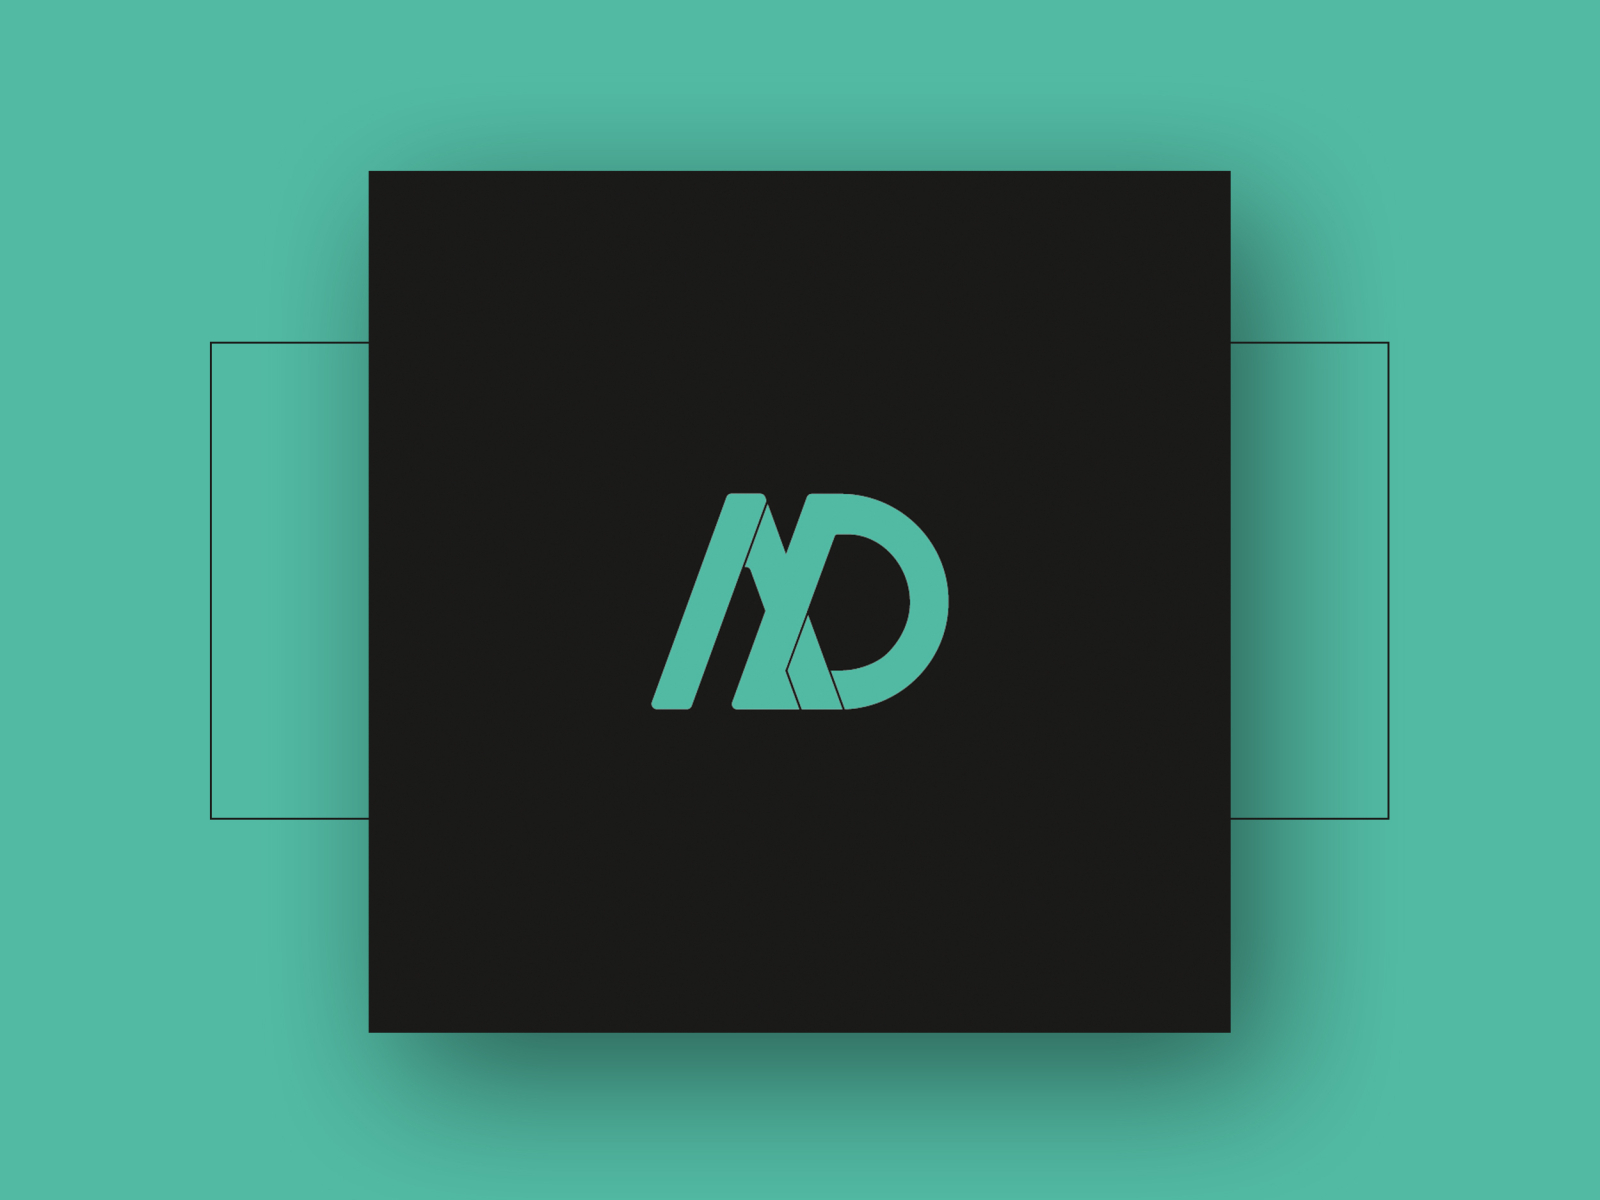 affinity designer logo templates